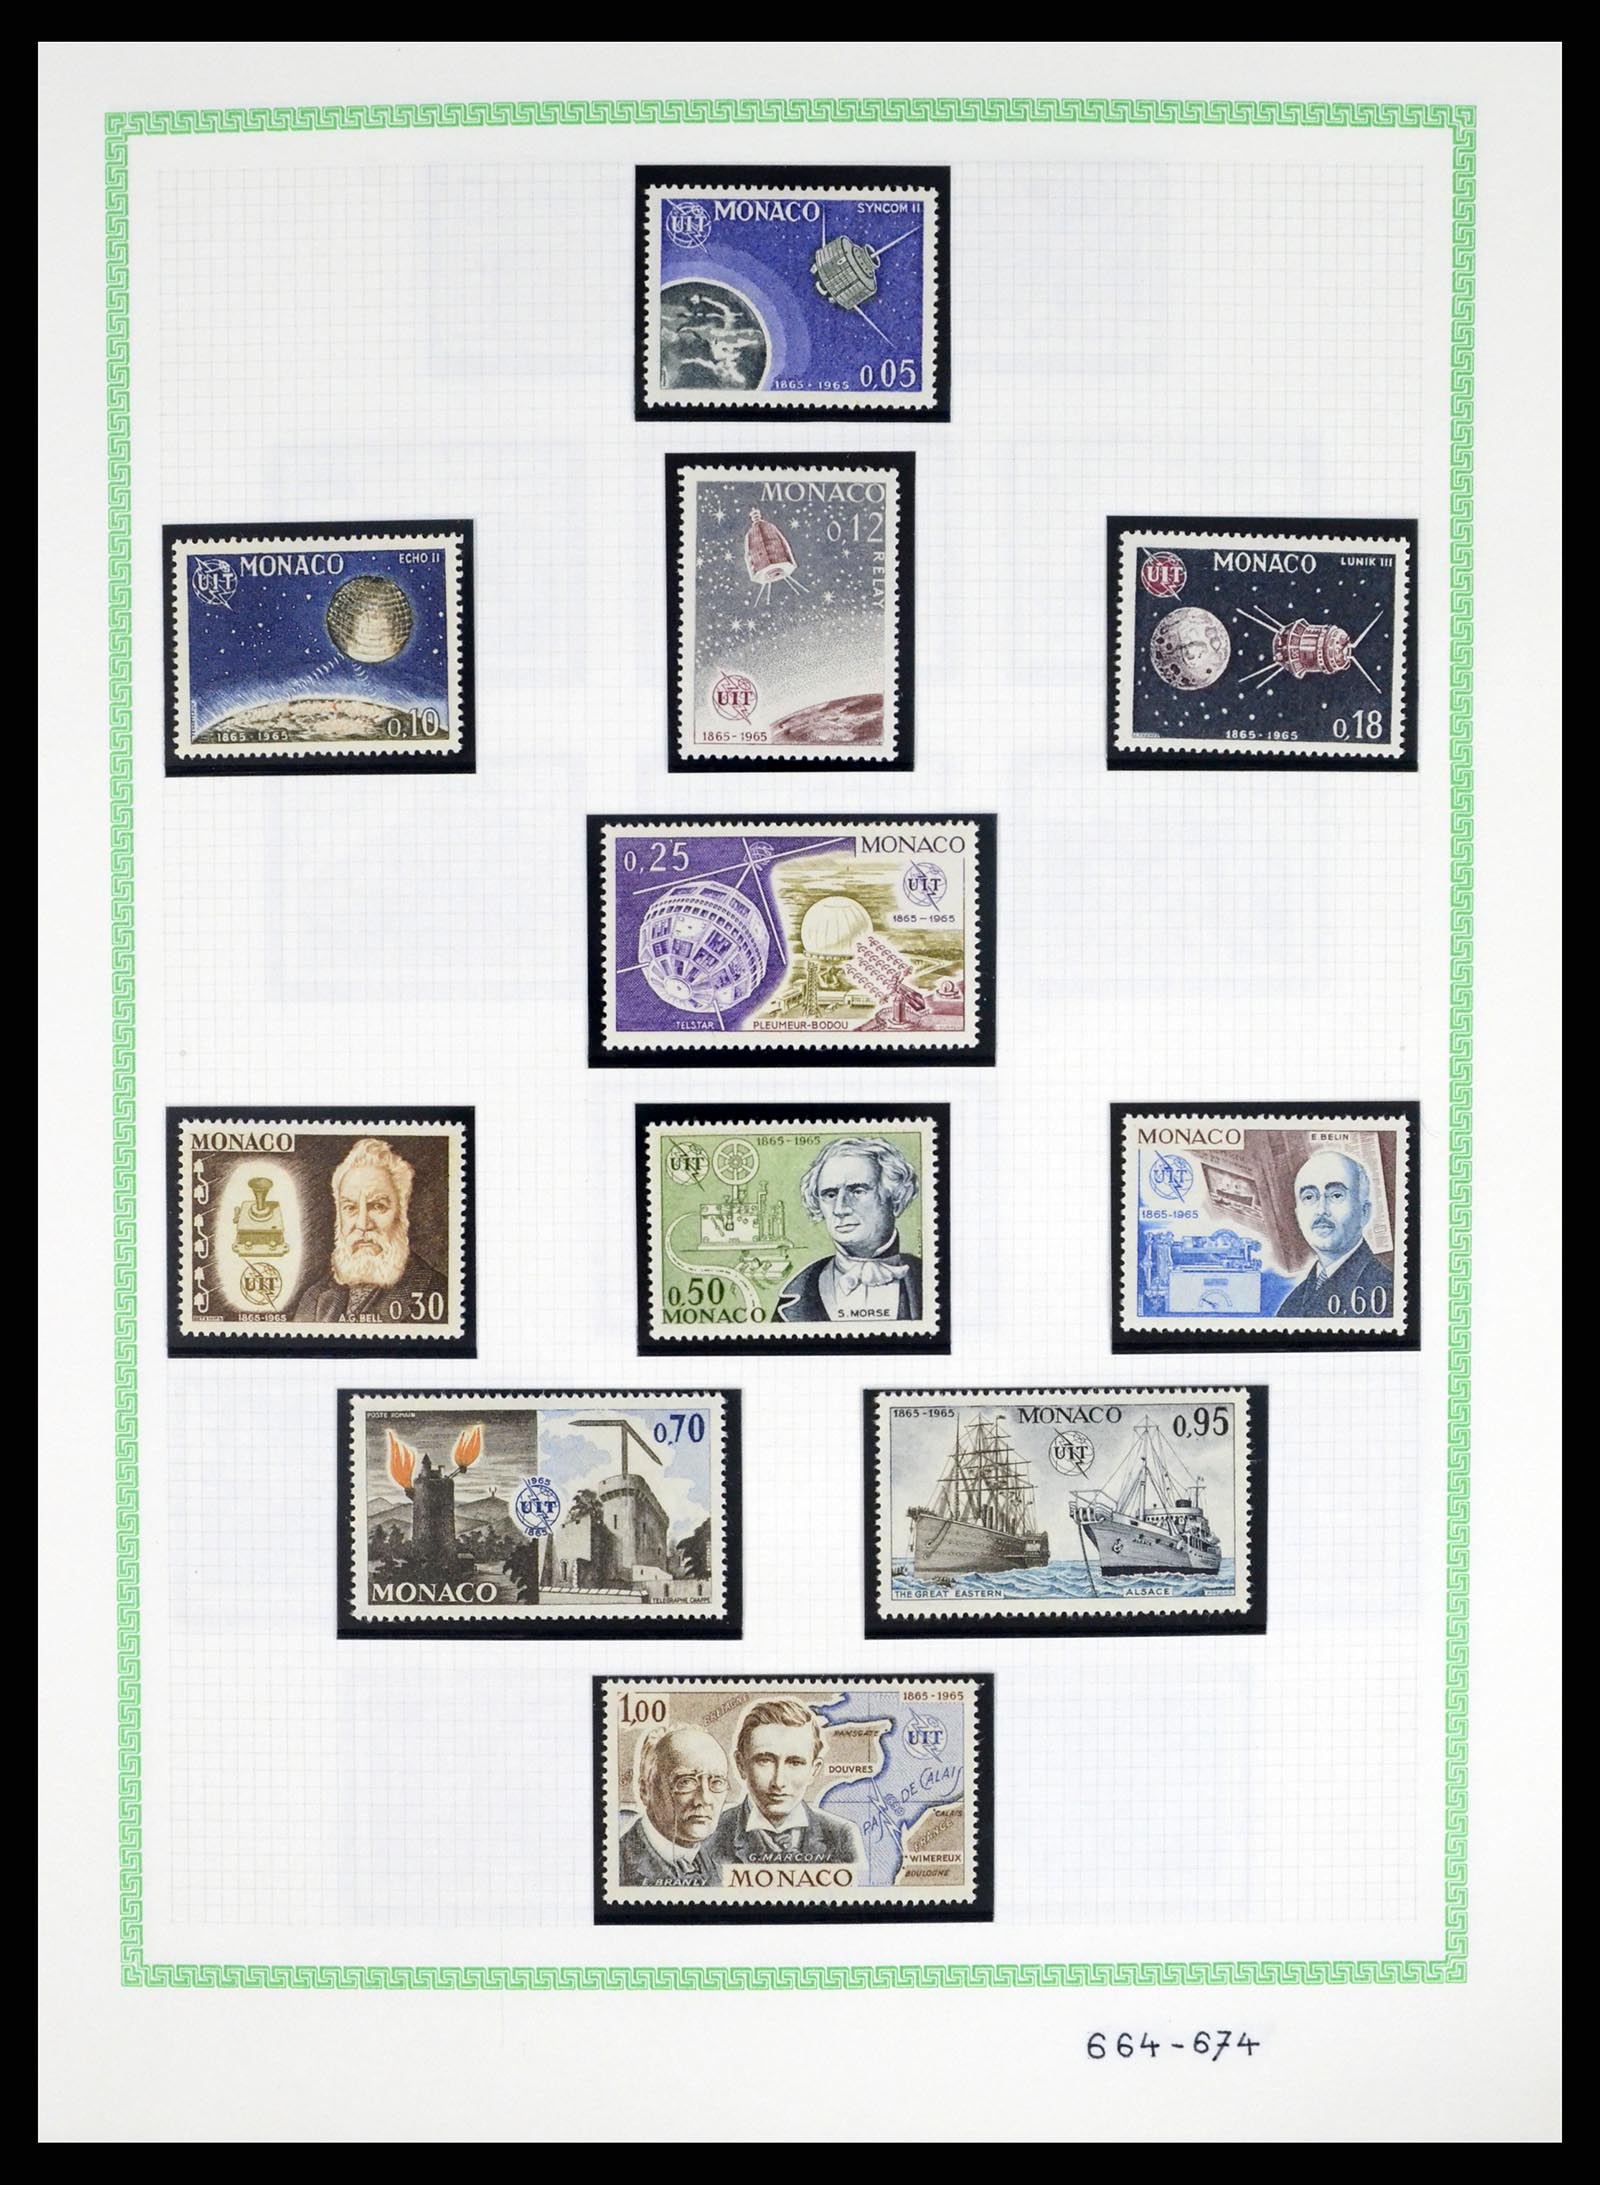 37380 063 - Stamp collection 37380 Monaco 1921-2015.